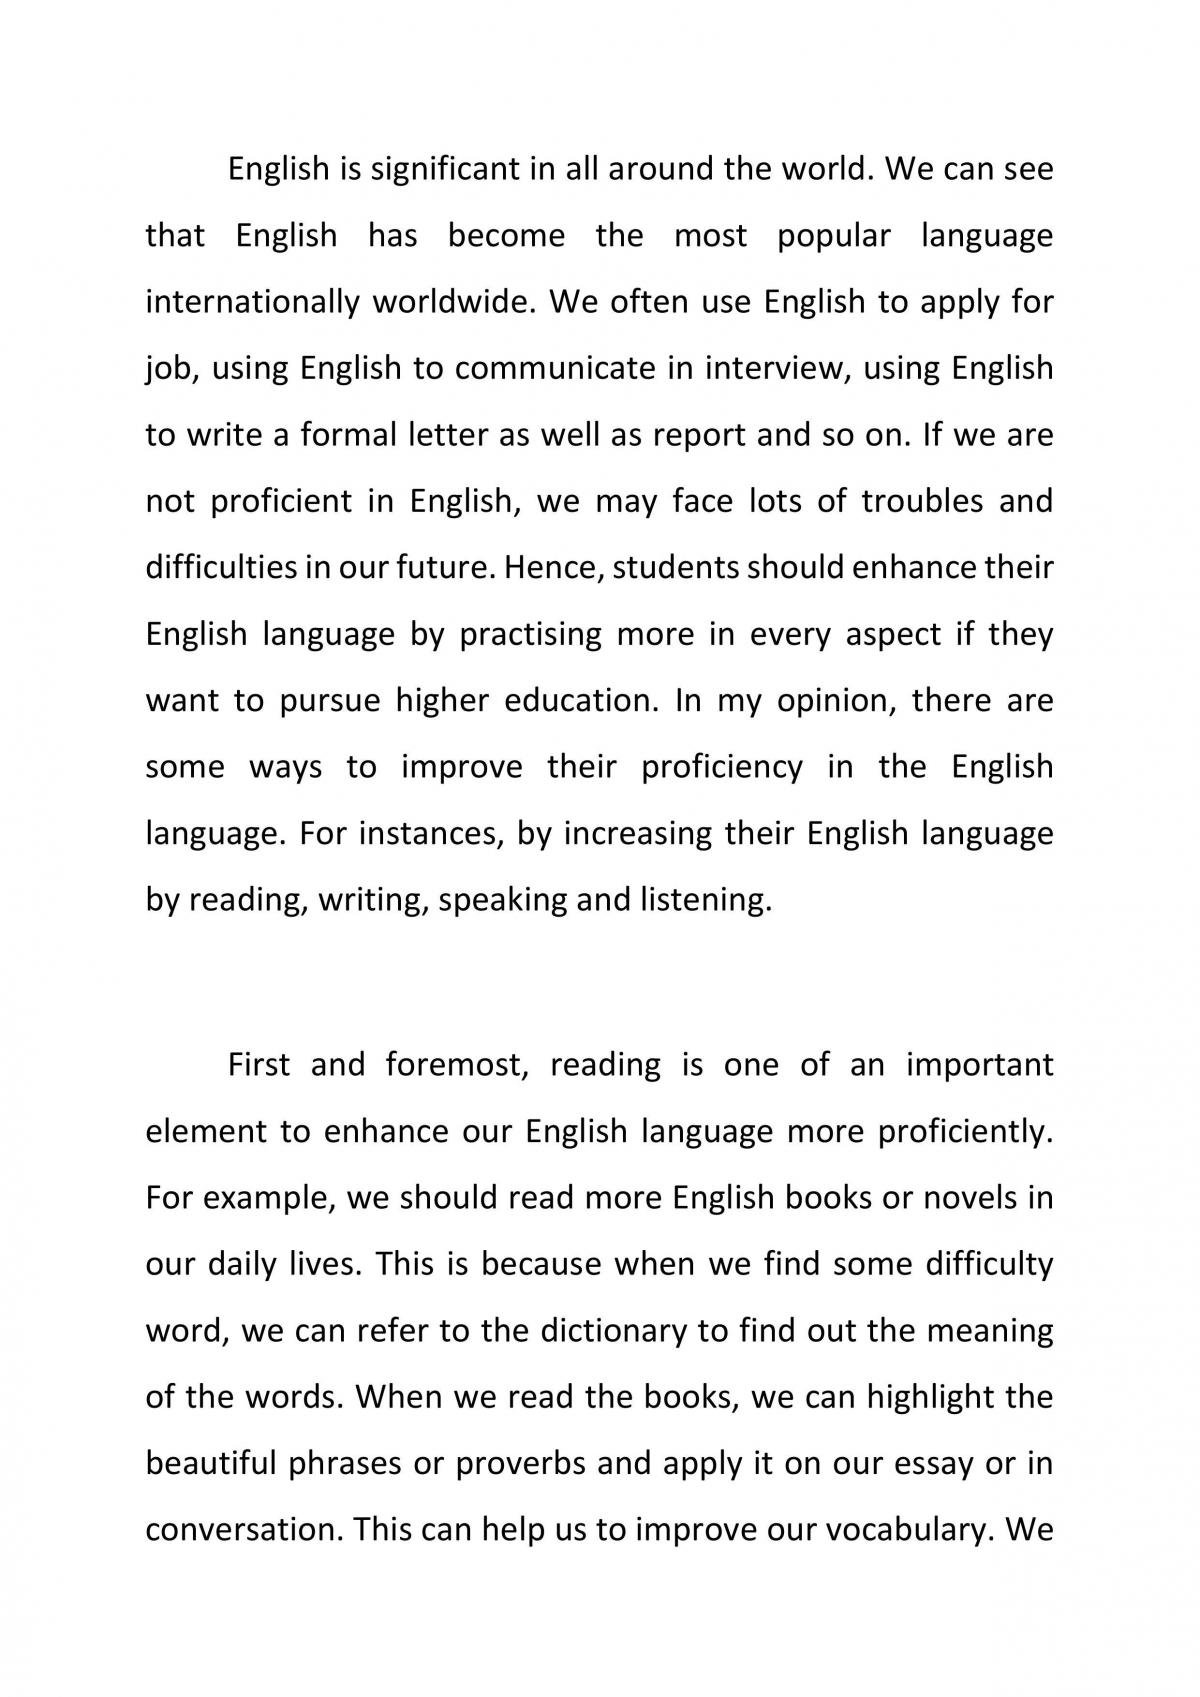 strategies for enhancing language proficiency essay